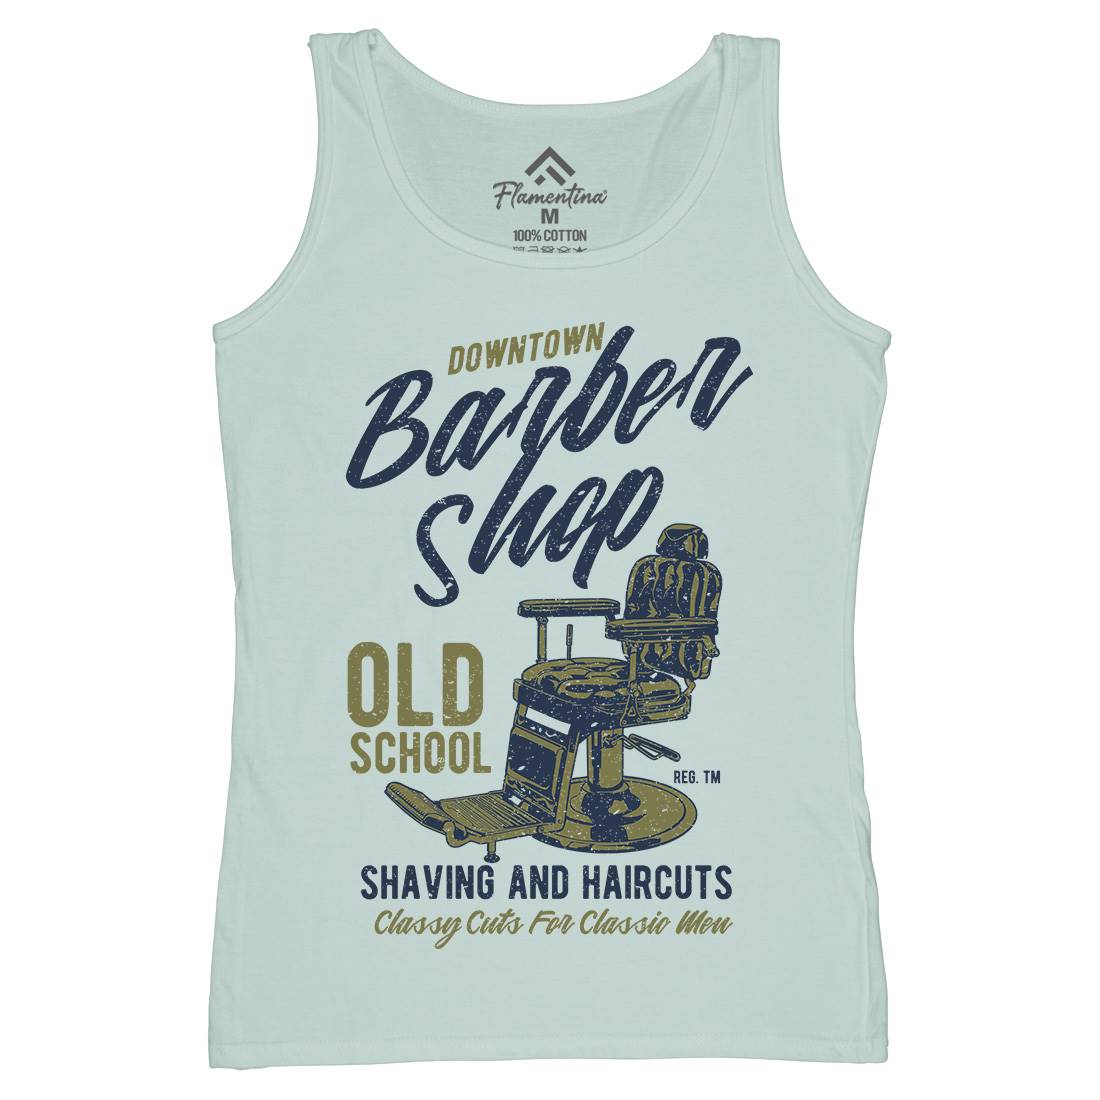 Downtown Barbershop Womens Organic Tank Top Vest Barber A646